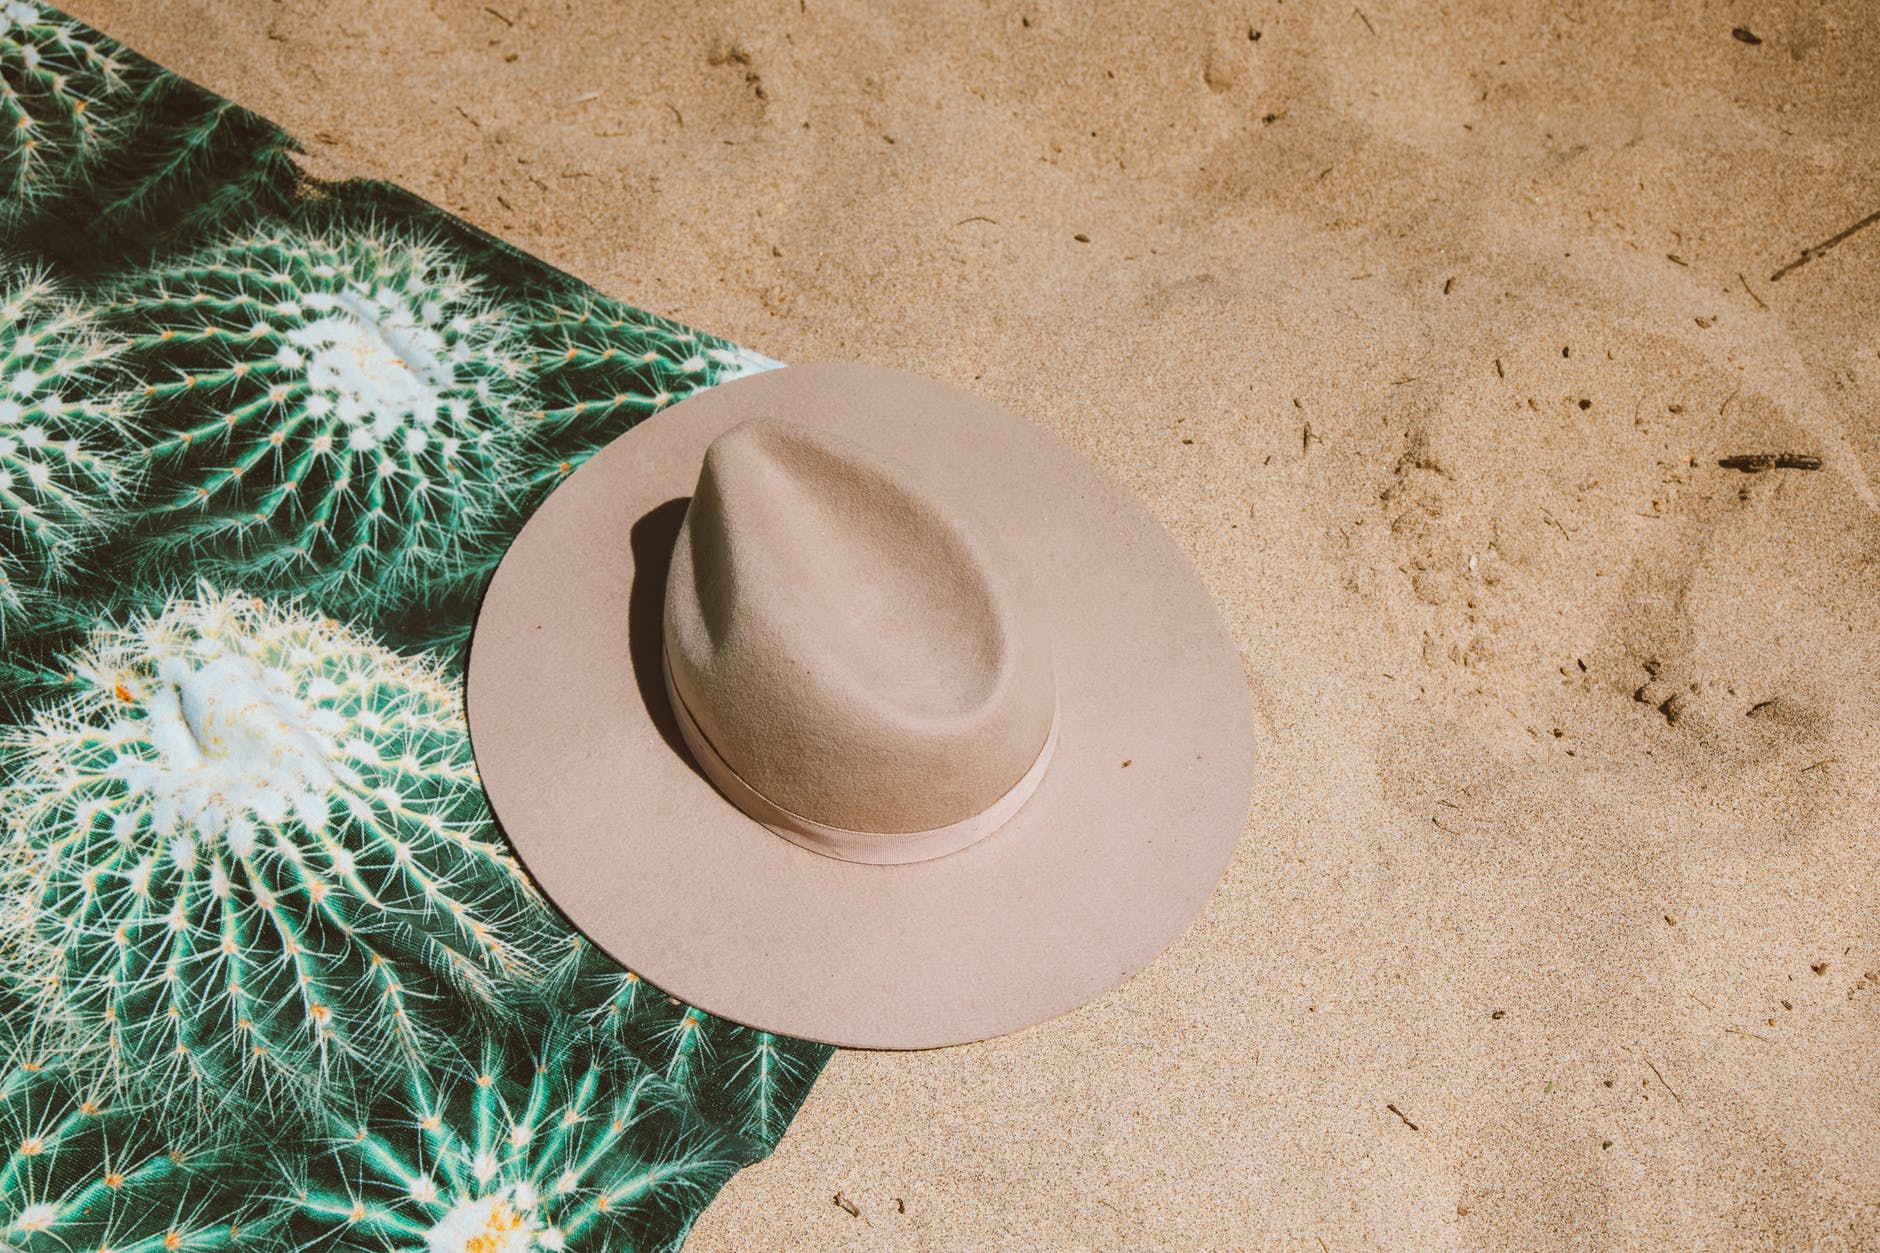 a cowboy hat on the sand, retirement, venice beach, Venice Florida a Good Place for Retire